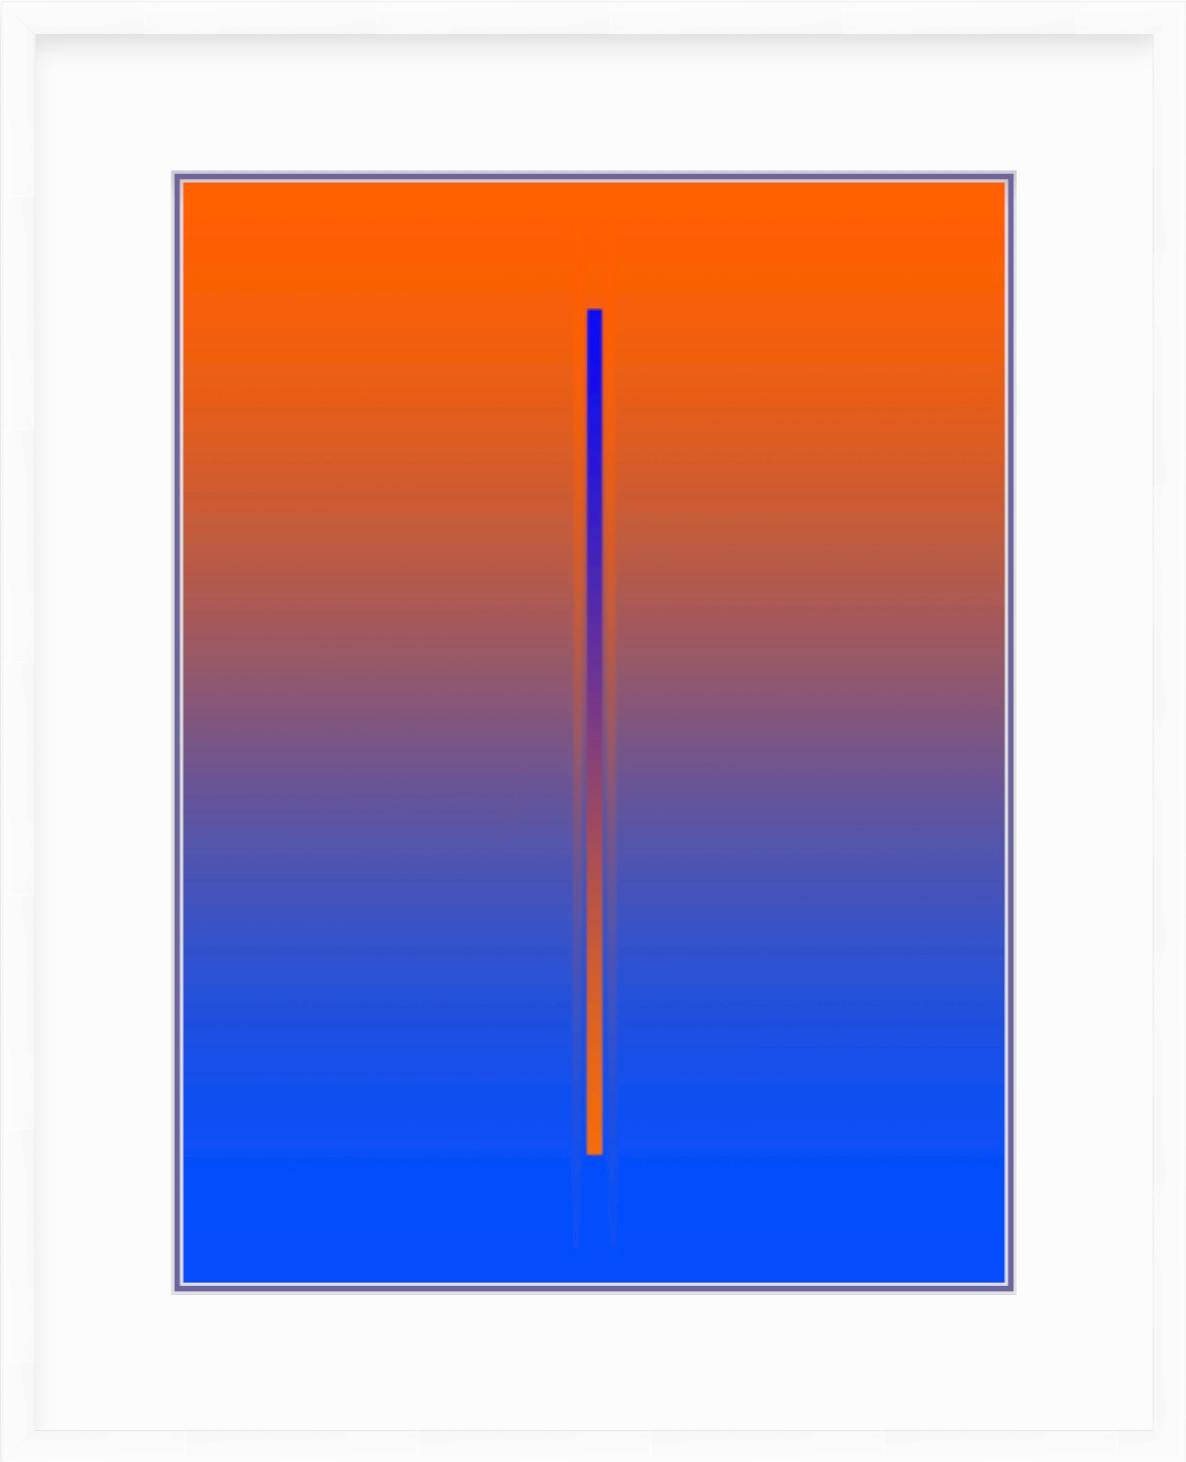 Pletneva Abstract Painting - "Lunar Year" - minimal digital print, orange and blue, white mat purple core